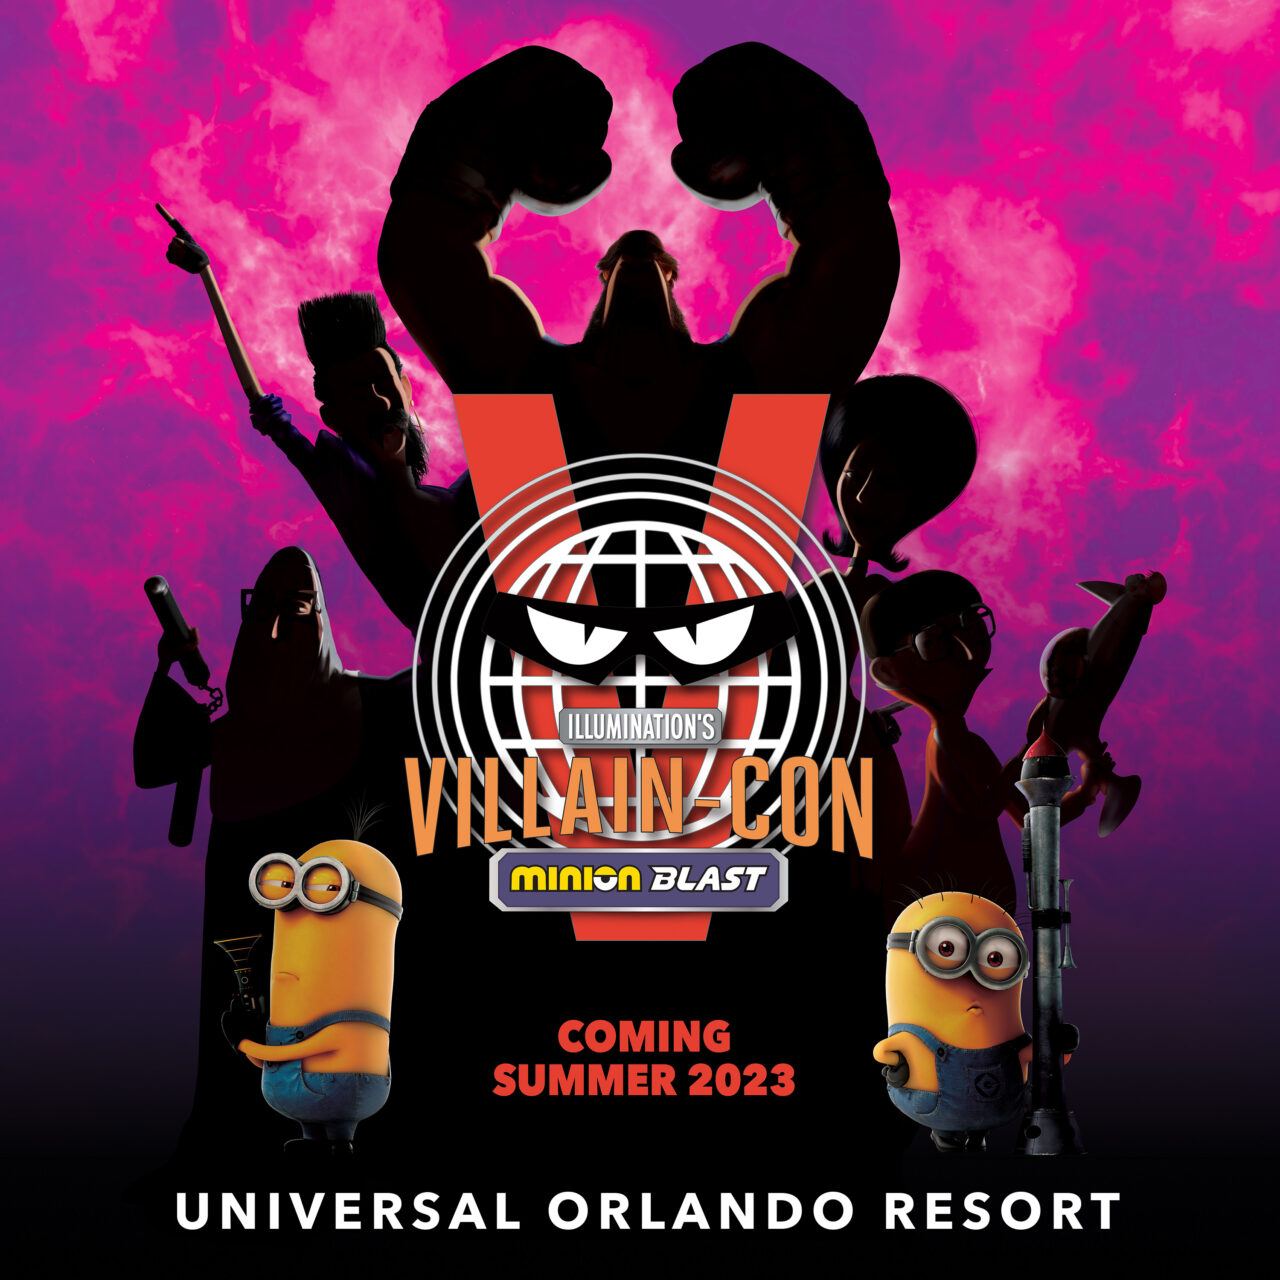 Illuminations-Villain-Con-Minion-Blast-Coming-to-Universal-Orlando-1280x1280.jpg